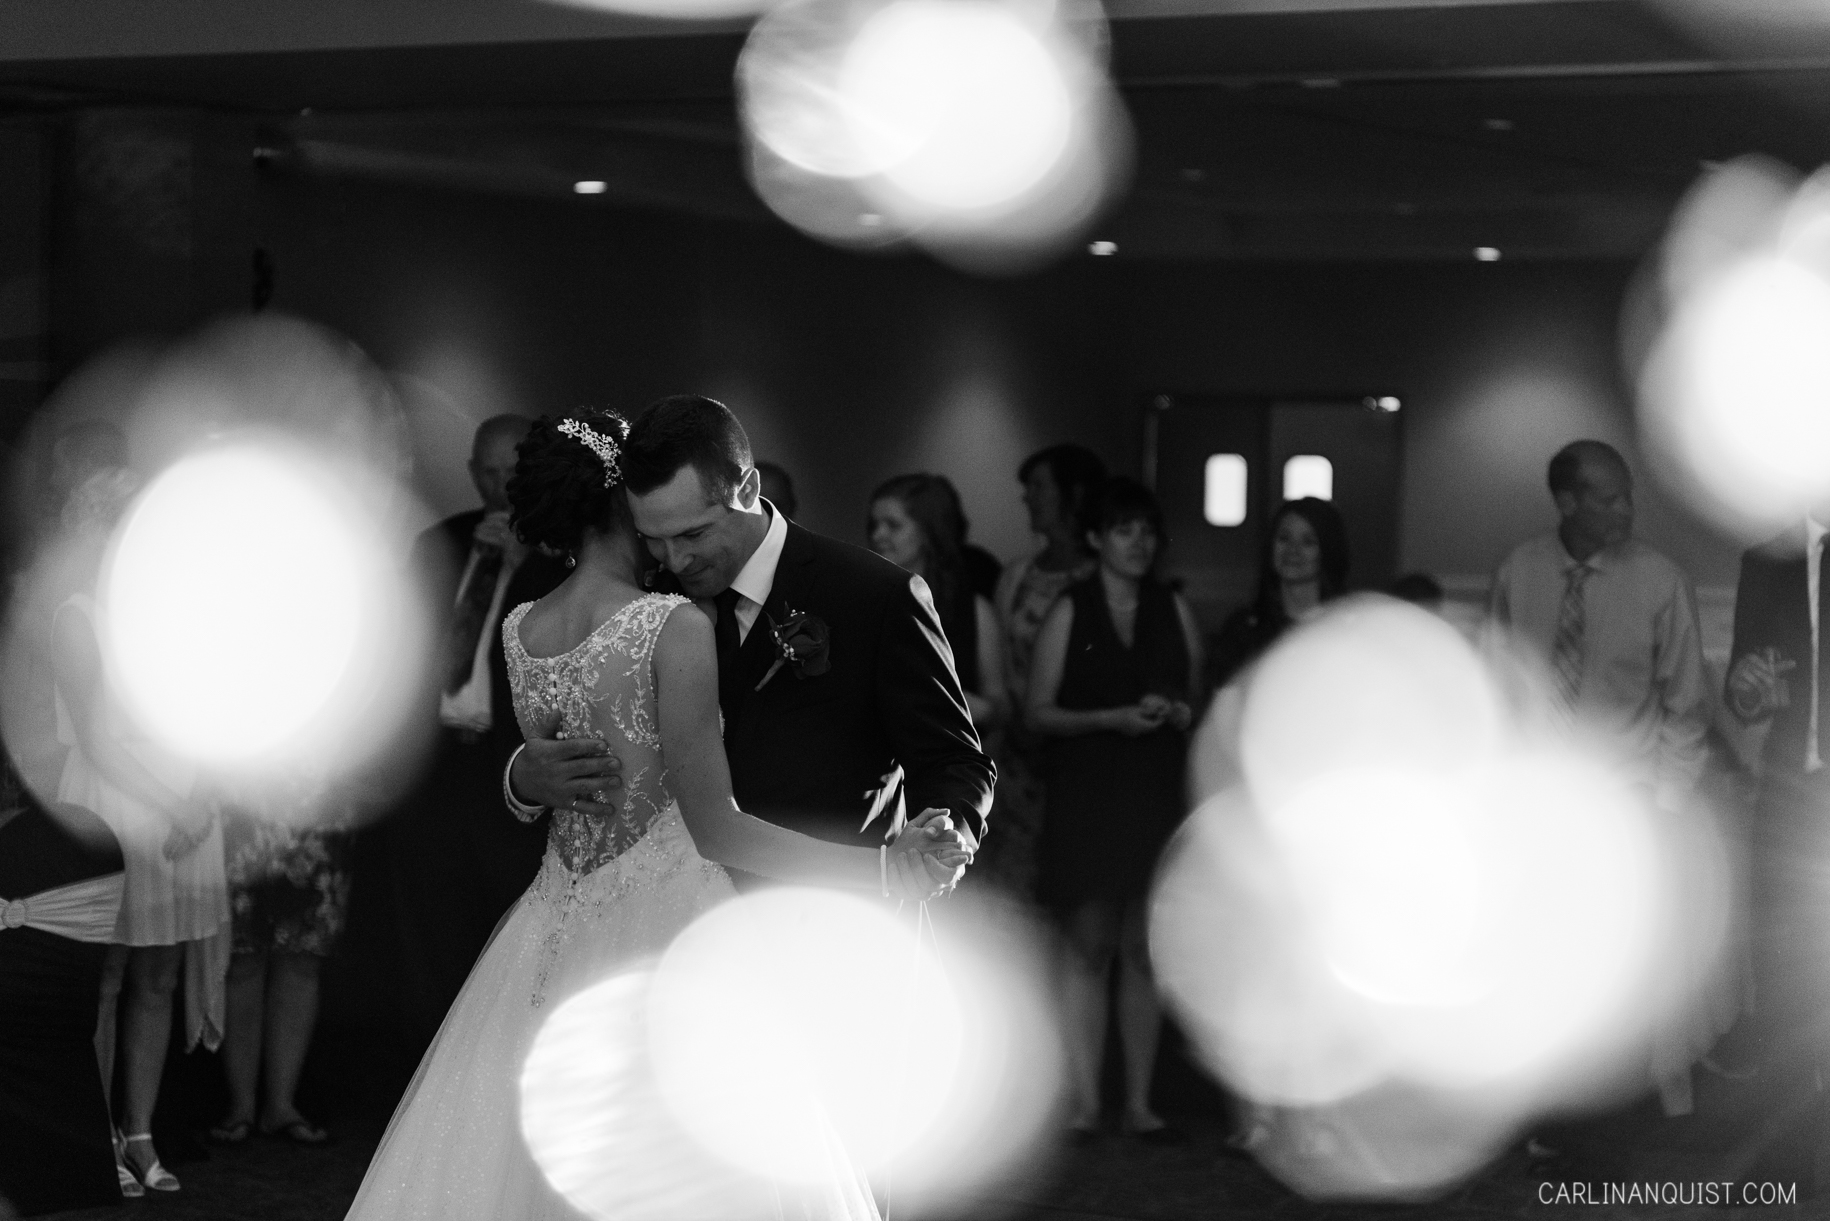 First Dance | Calgary Winter Club Wedding Photographer